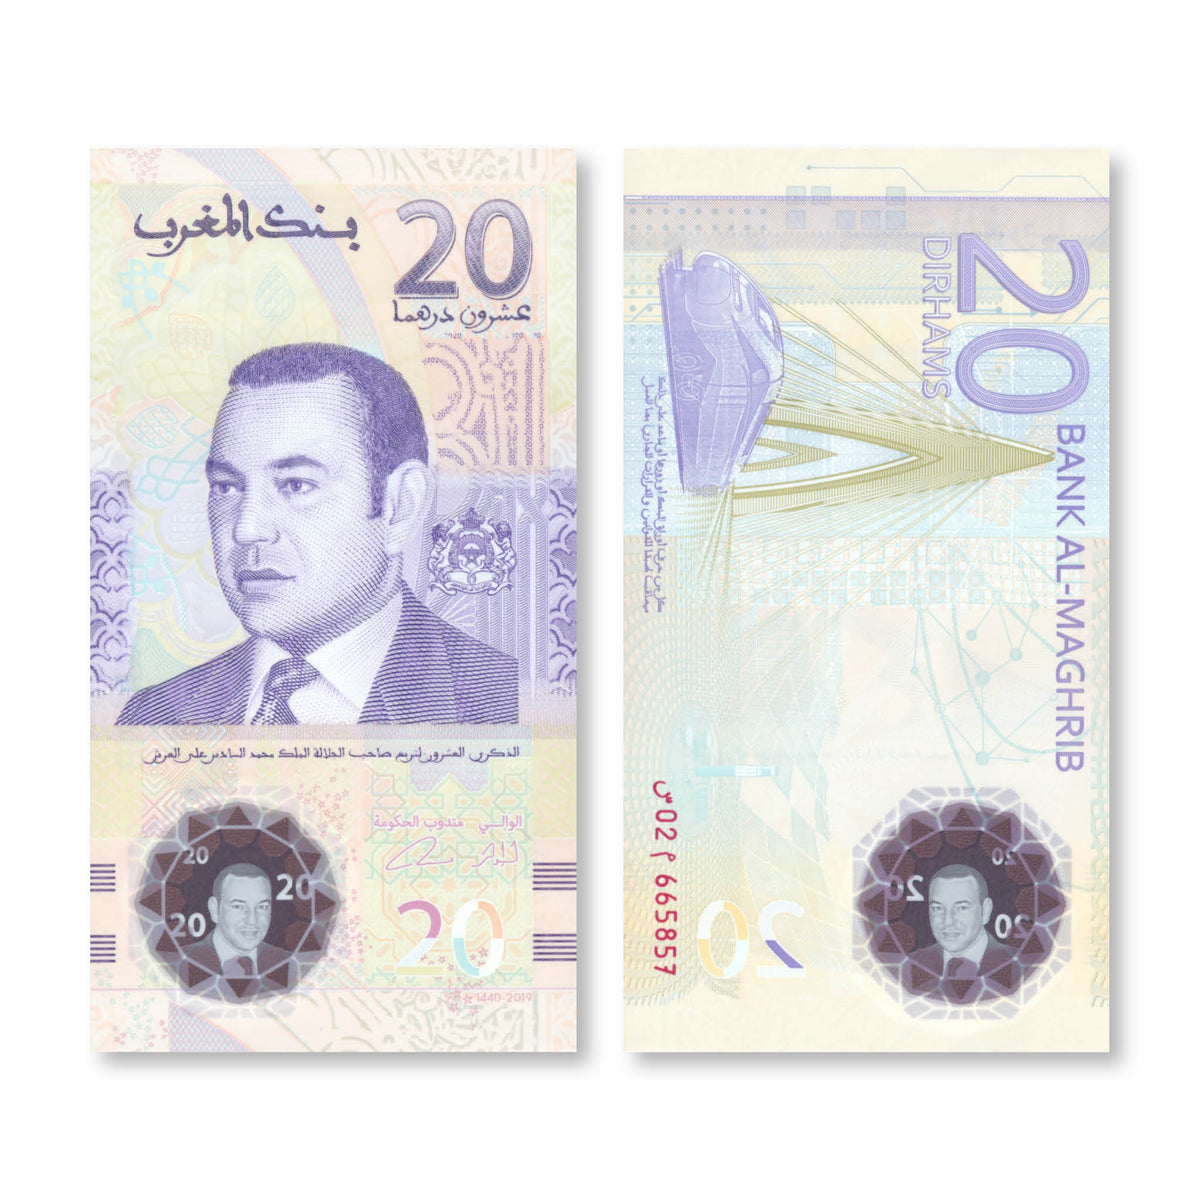 Morocco 20 Dirhams, 2019 Commemorative, B519a, UNC - Robert's World Money - World Banknotes